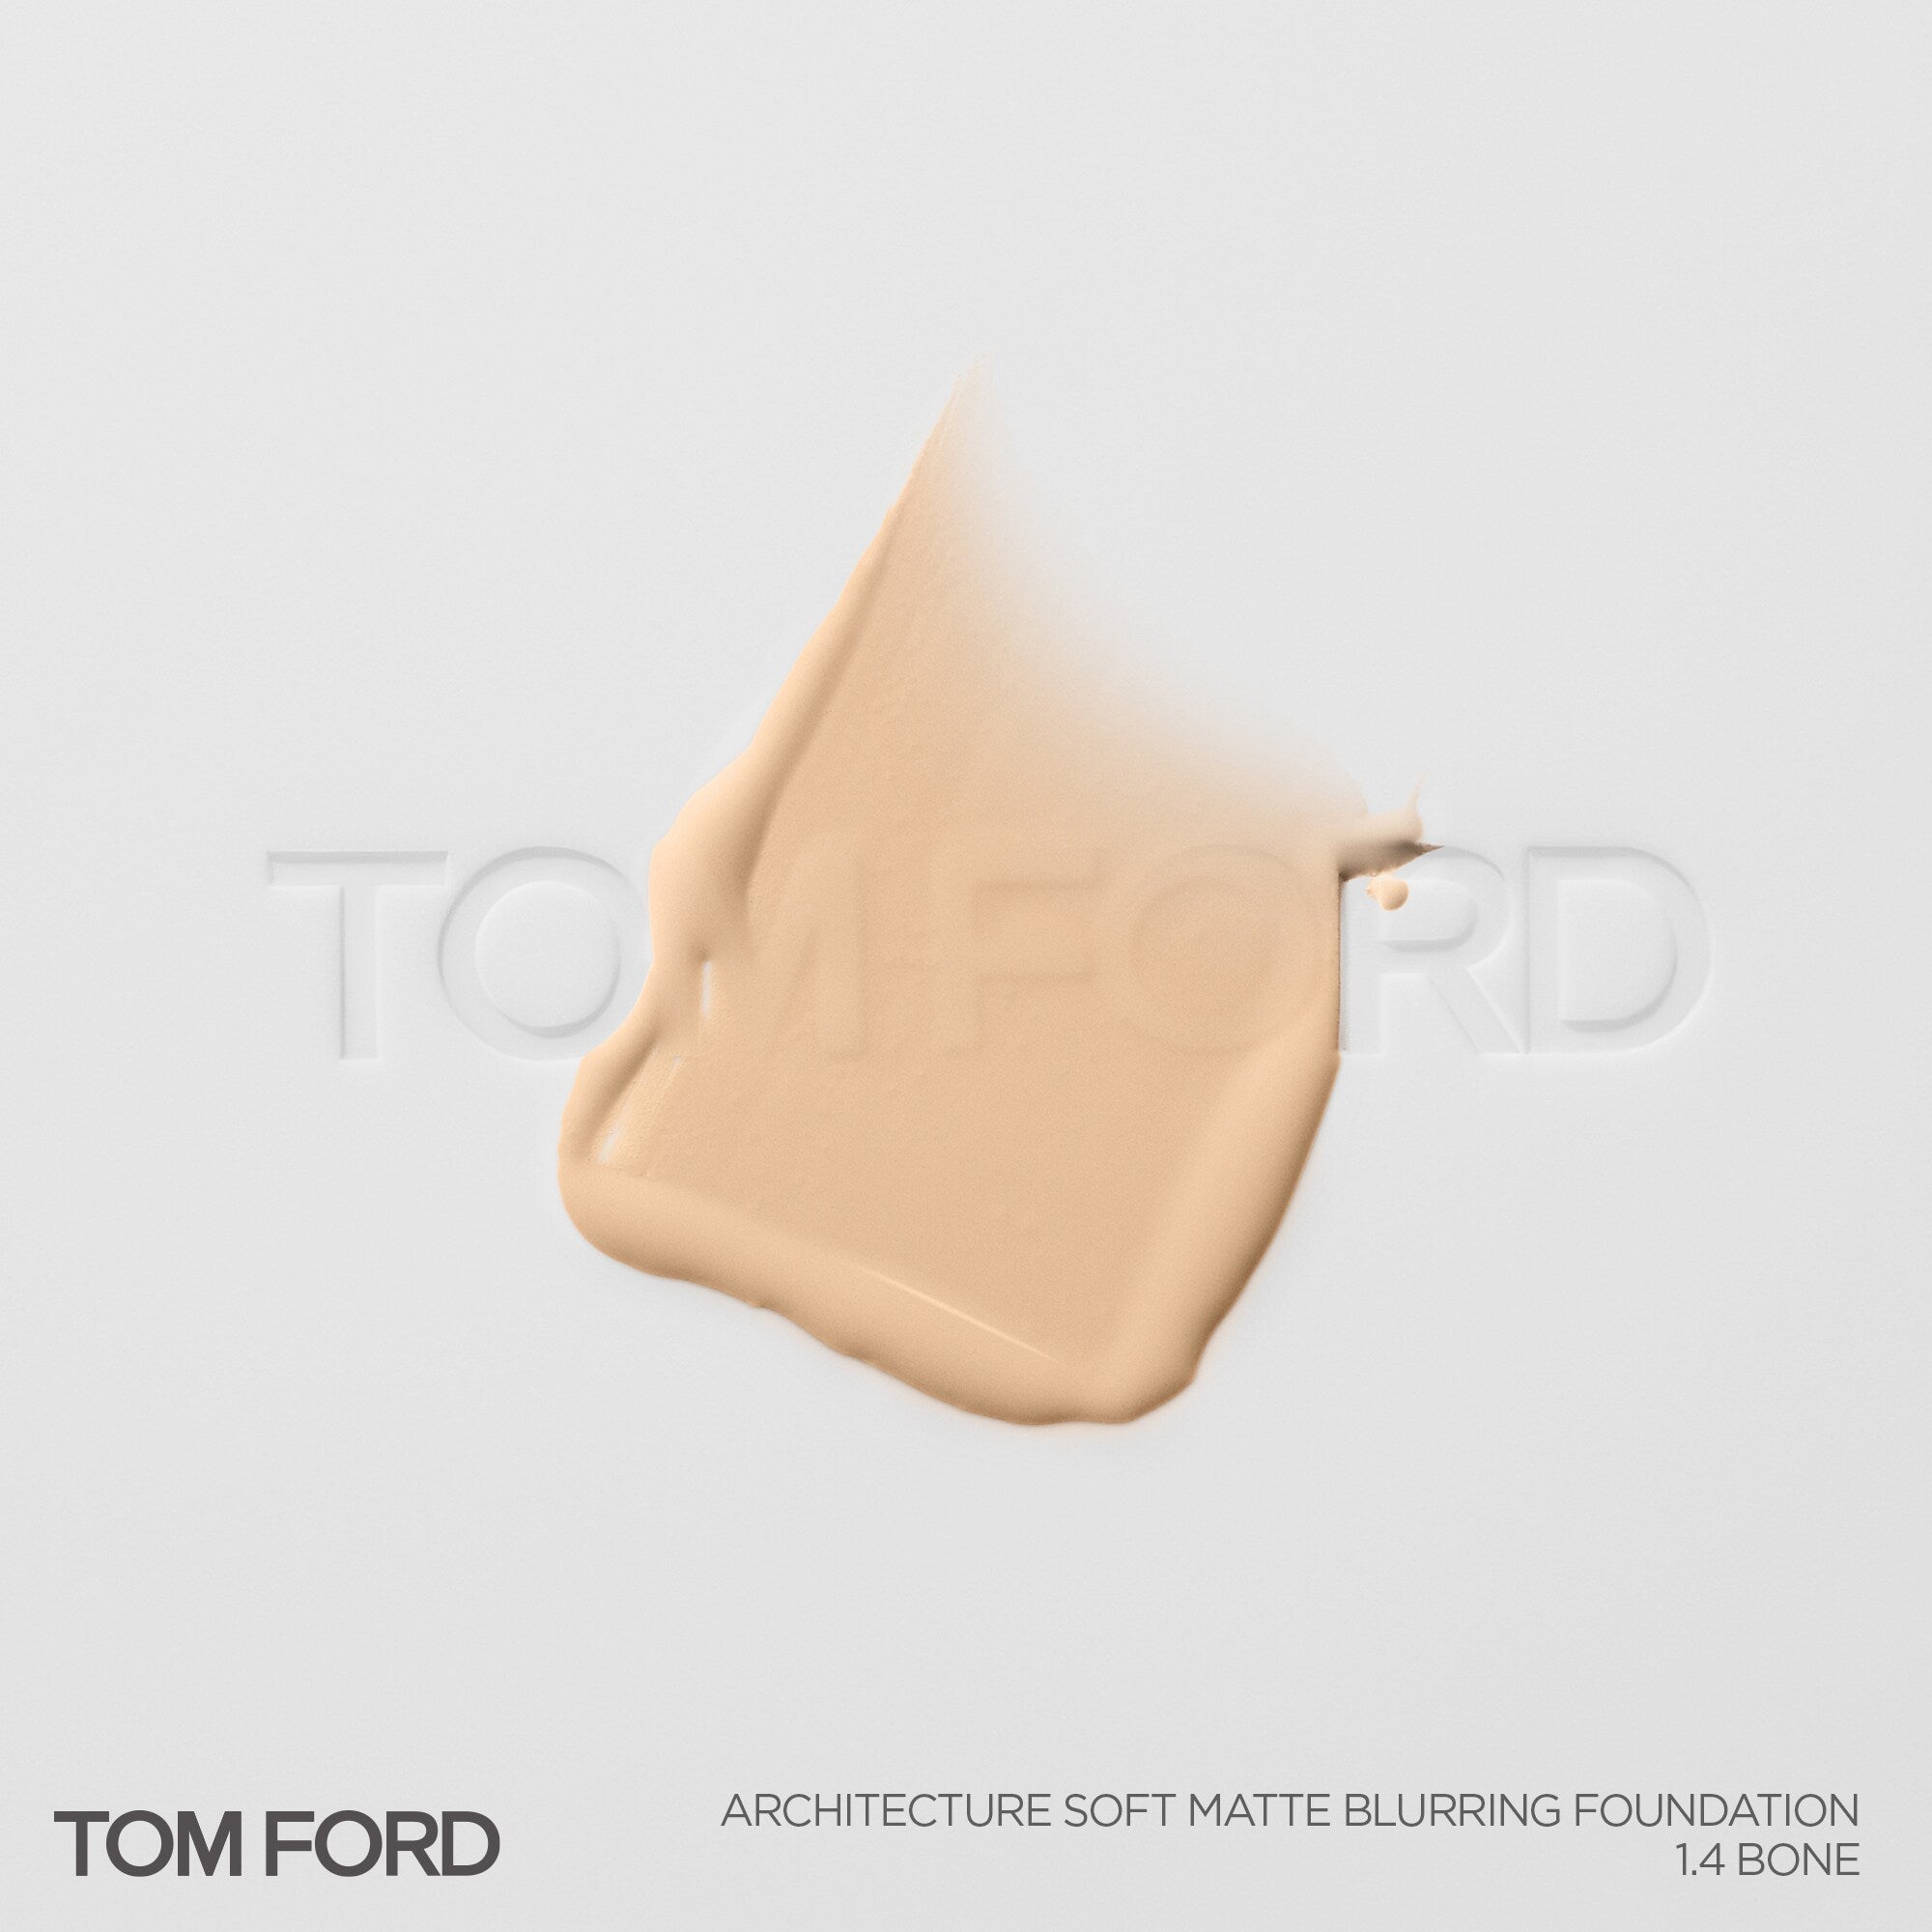 Kem Nền TOM FORD Architecture Soft Matte Foundation #1.4 Bone